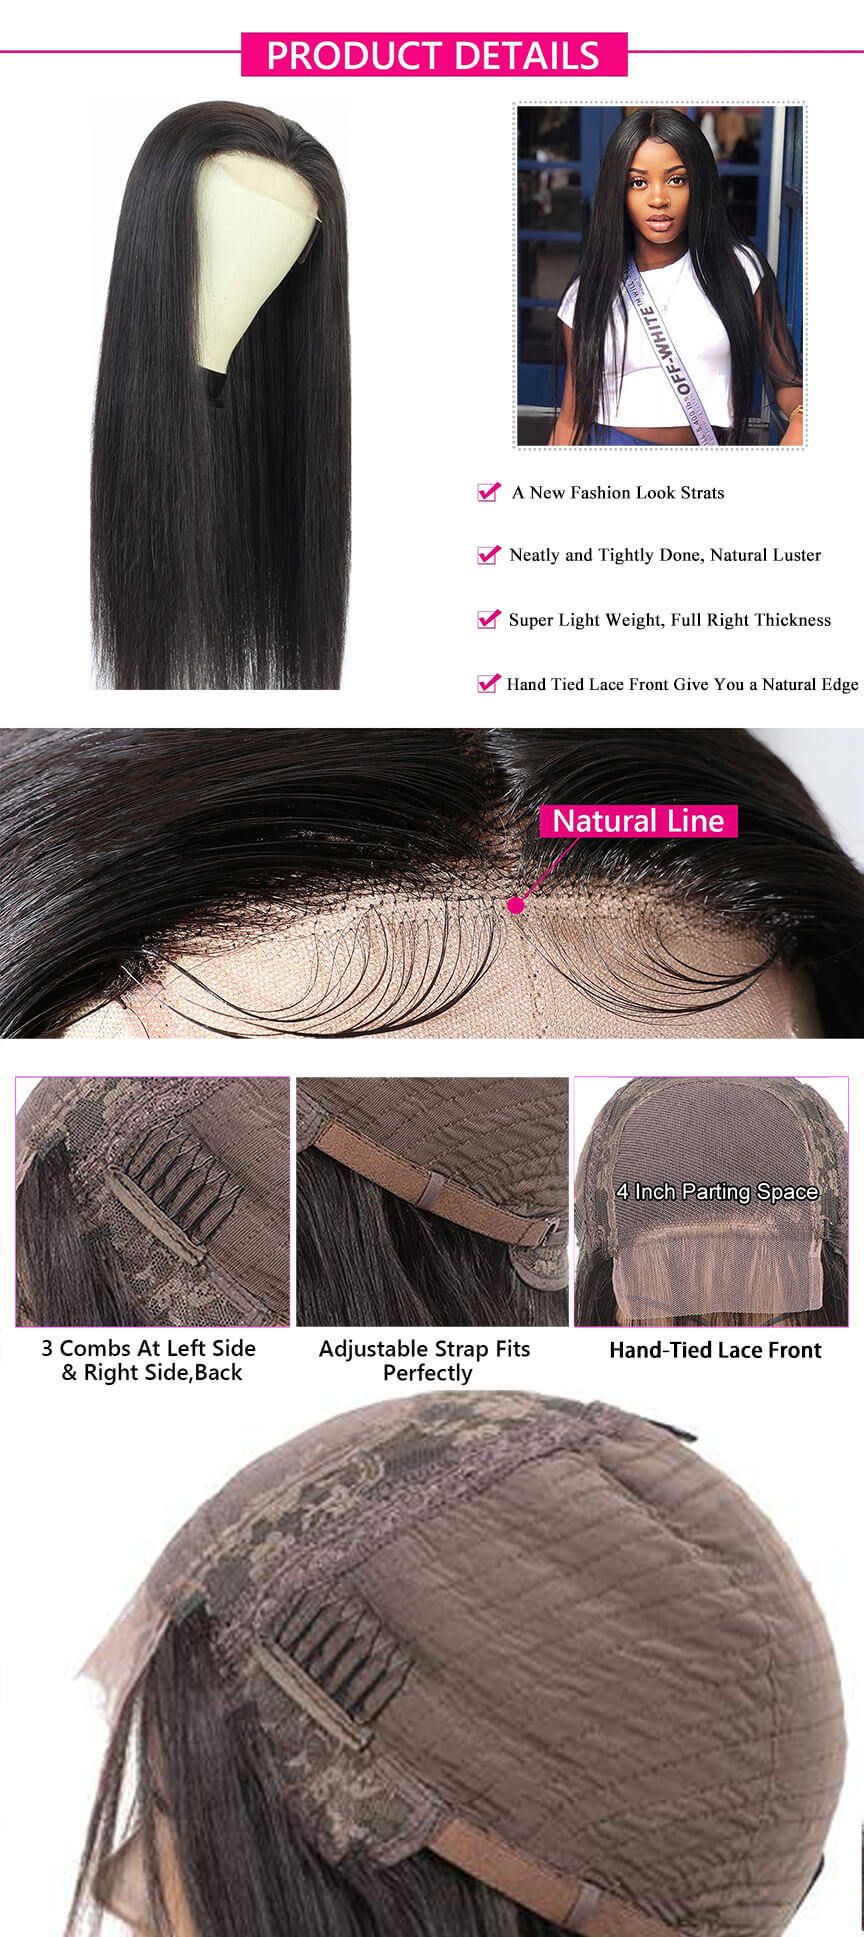 Straight Hair Lace Closure Wig Description